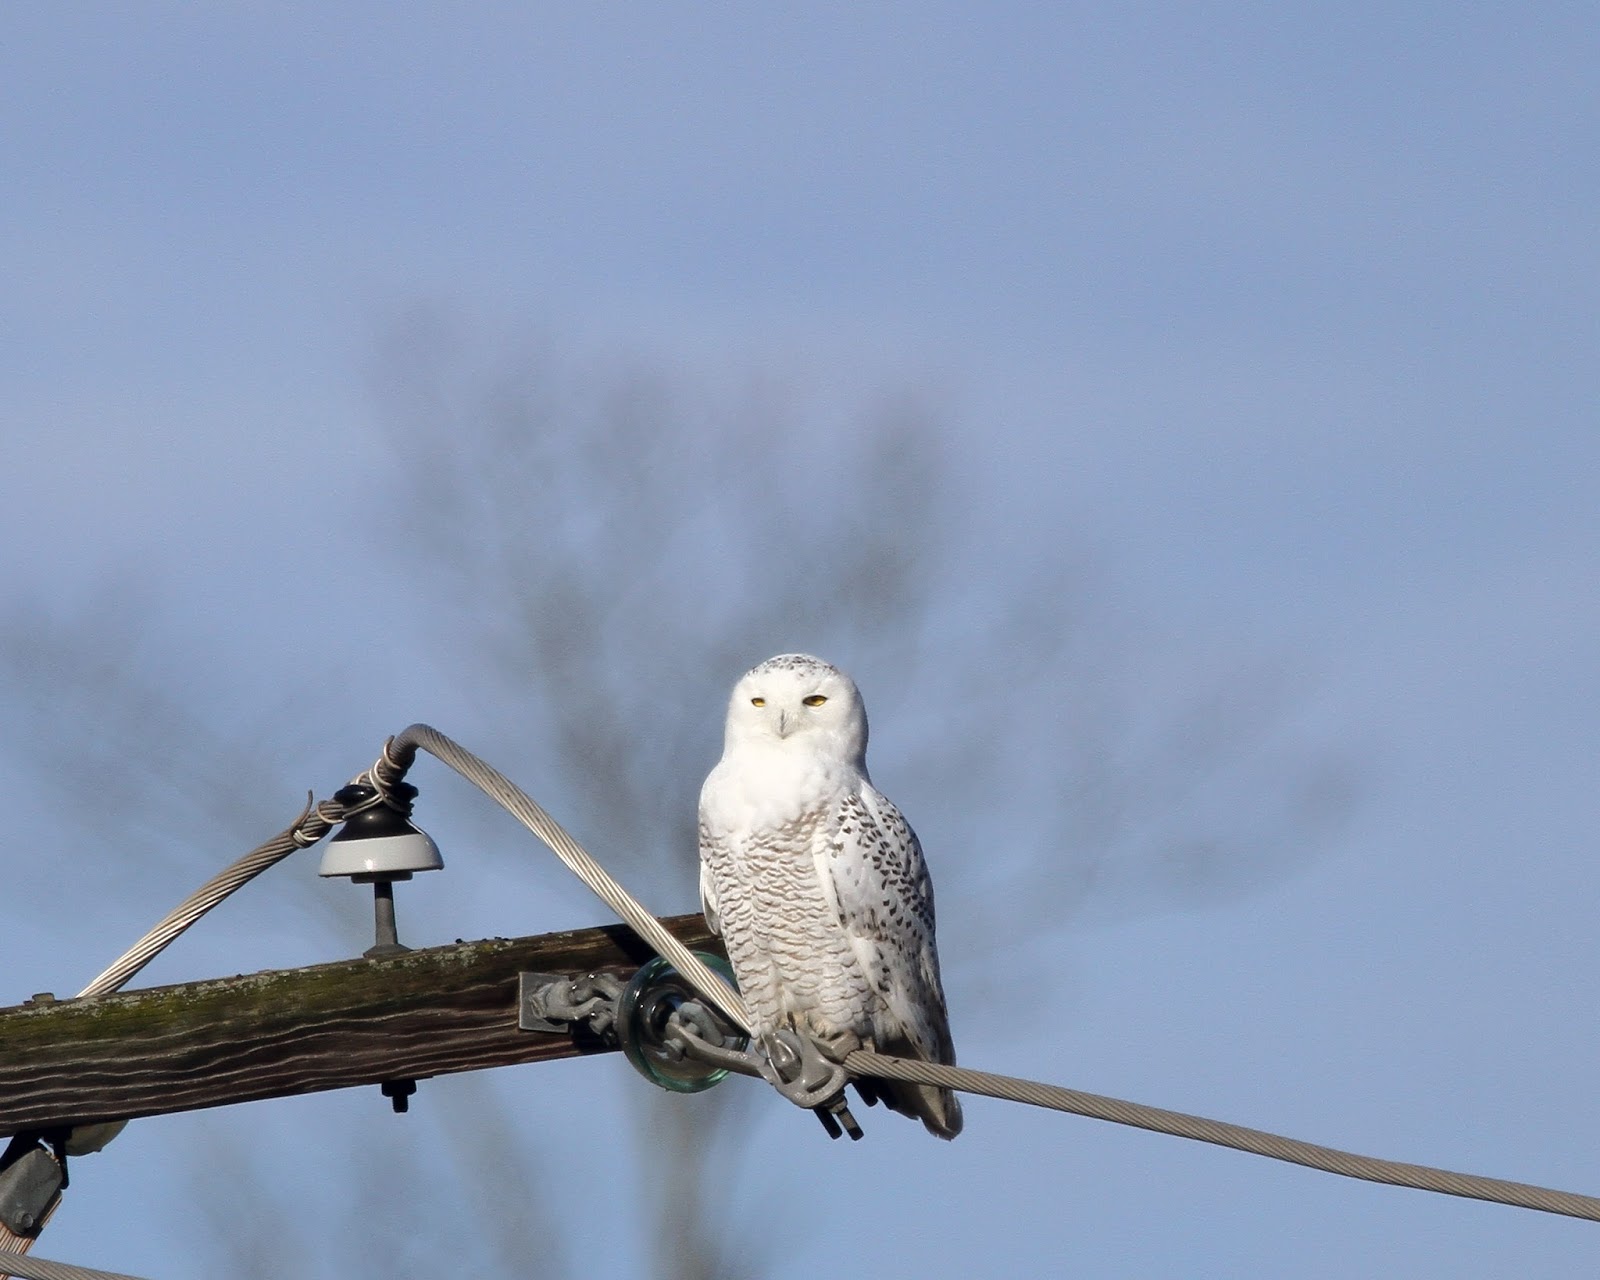 Julie Zickefoose on Blogspot: Parkersburg's Snowy Owl